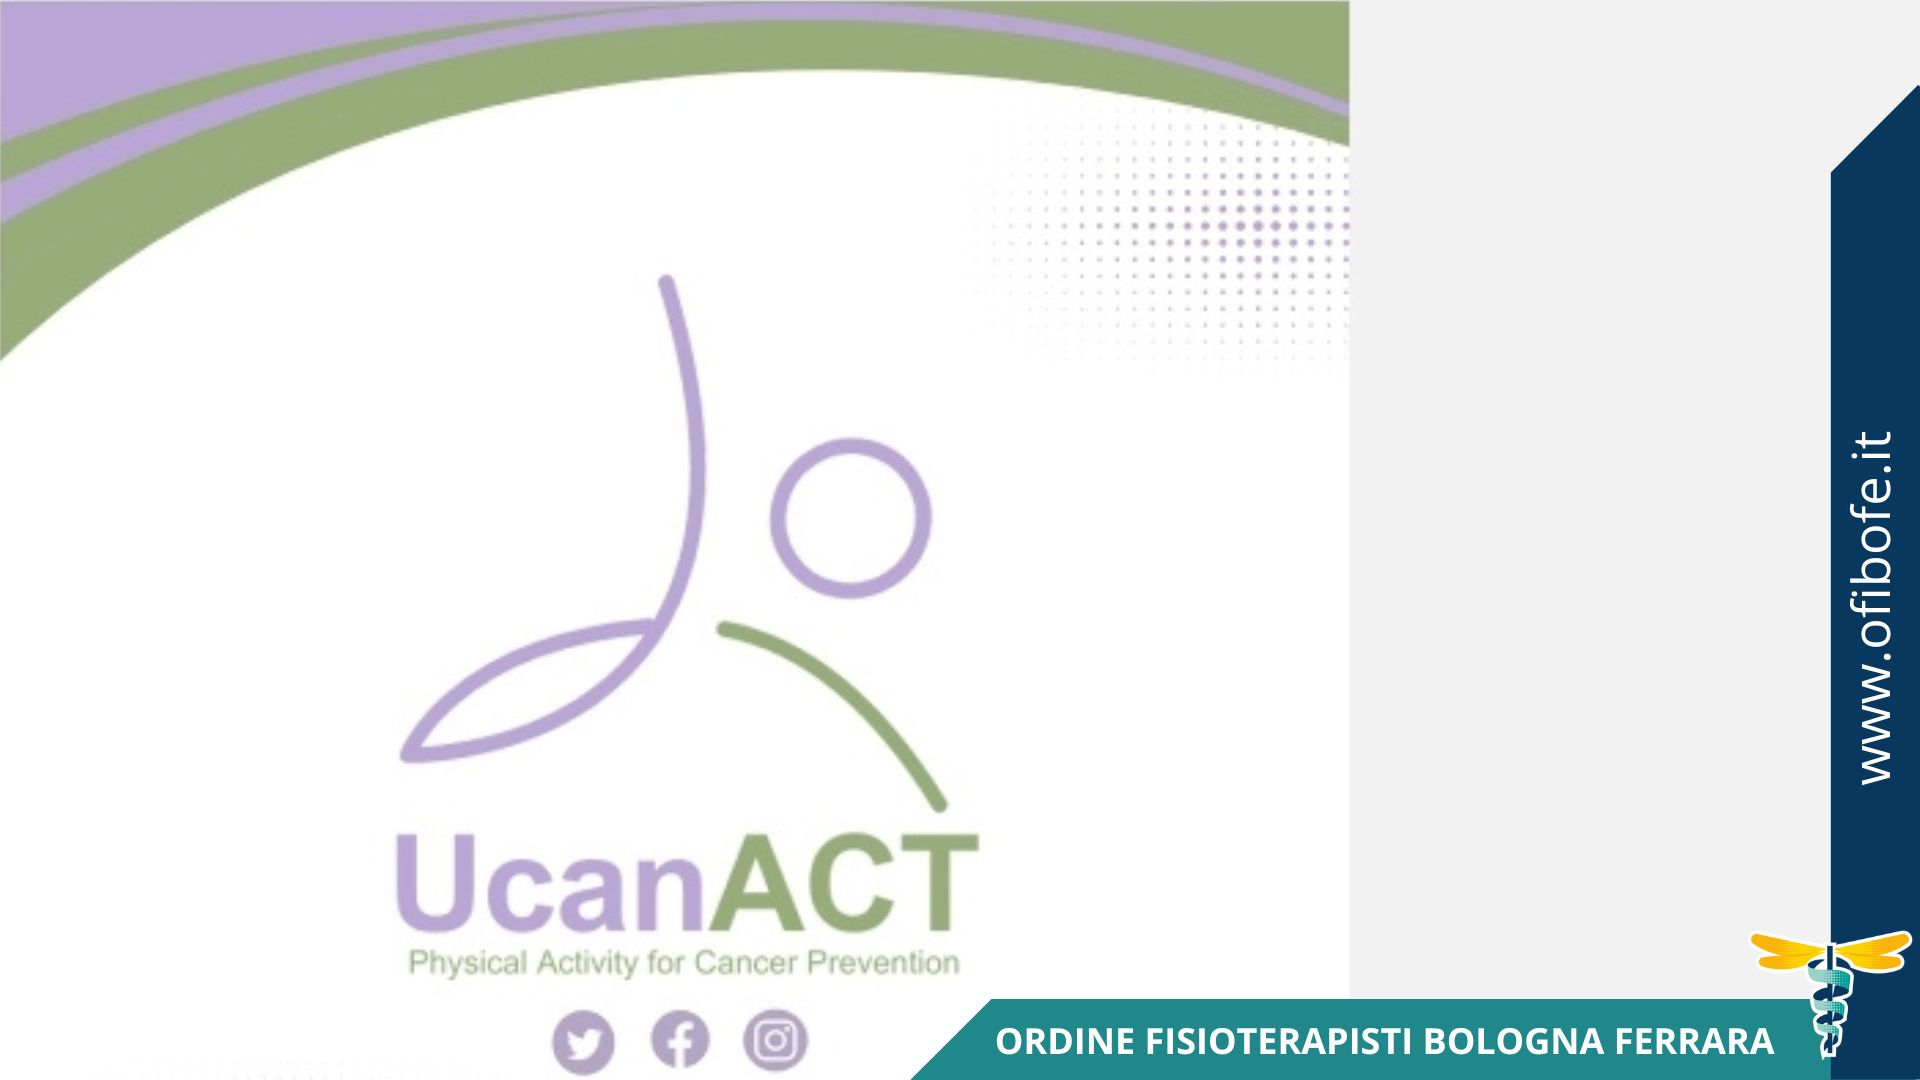 ucanact logo